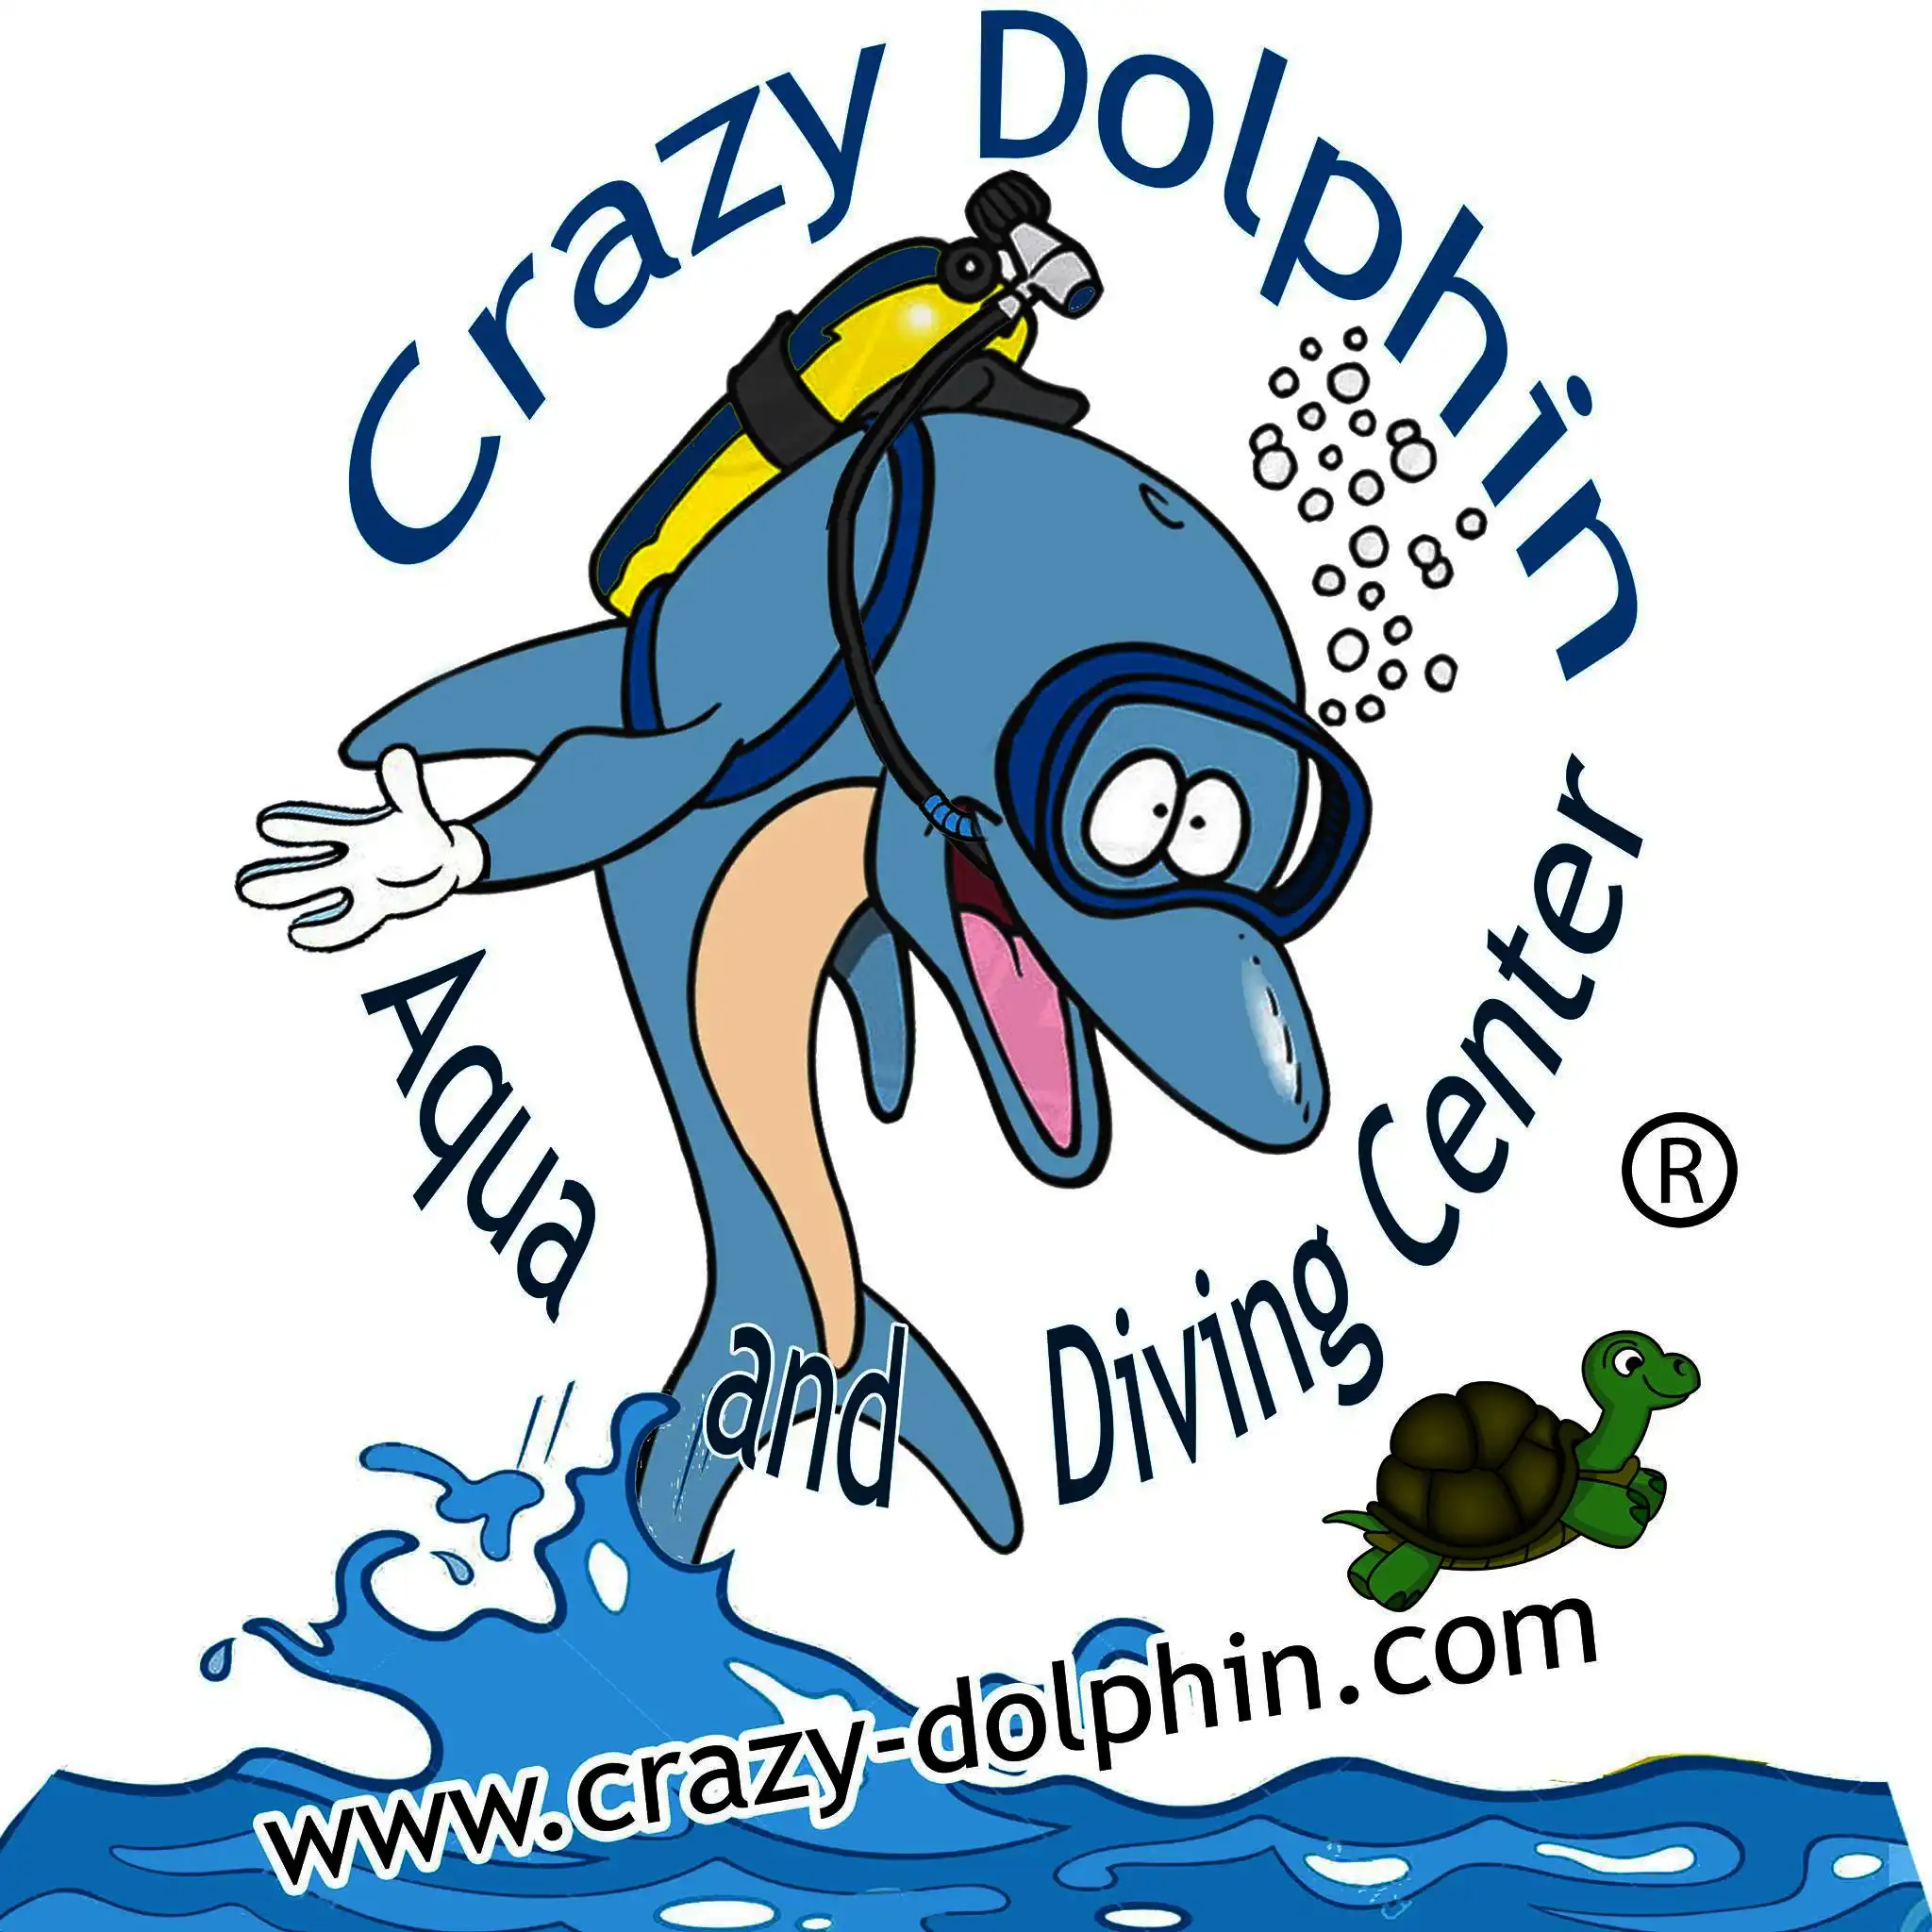 Crazy Dolphin